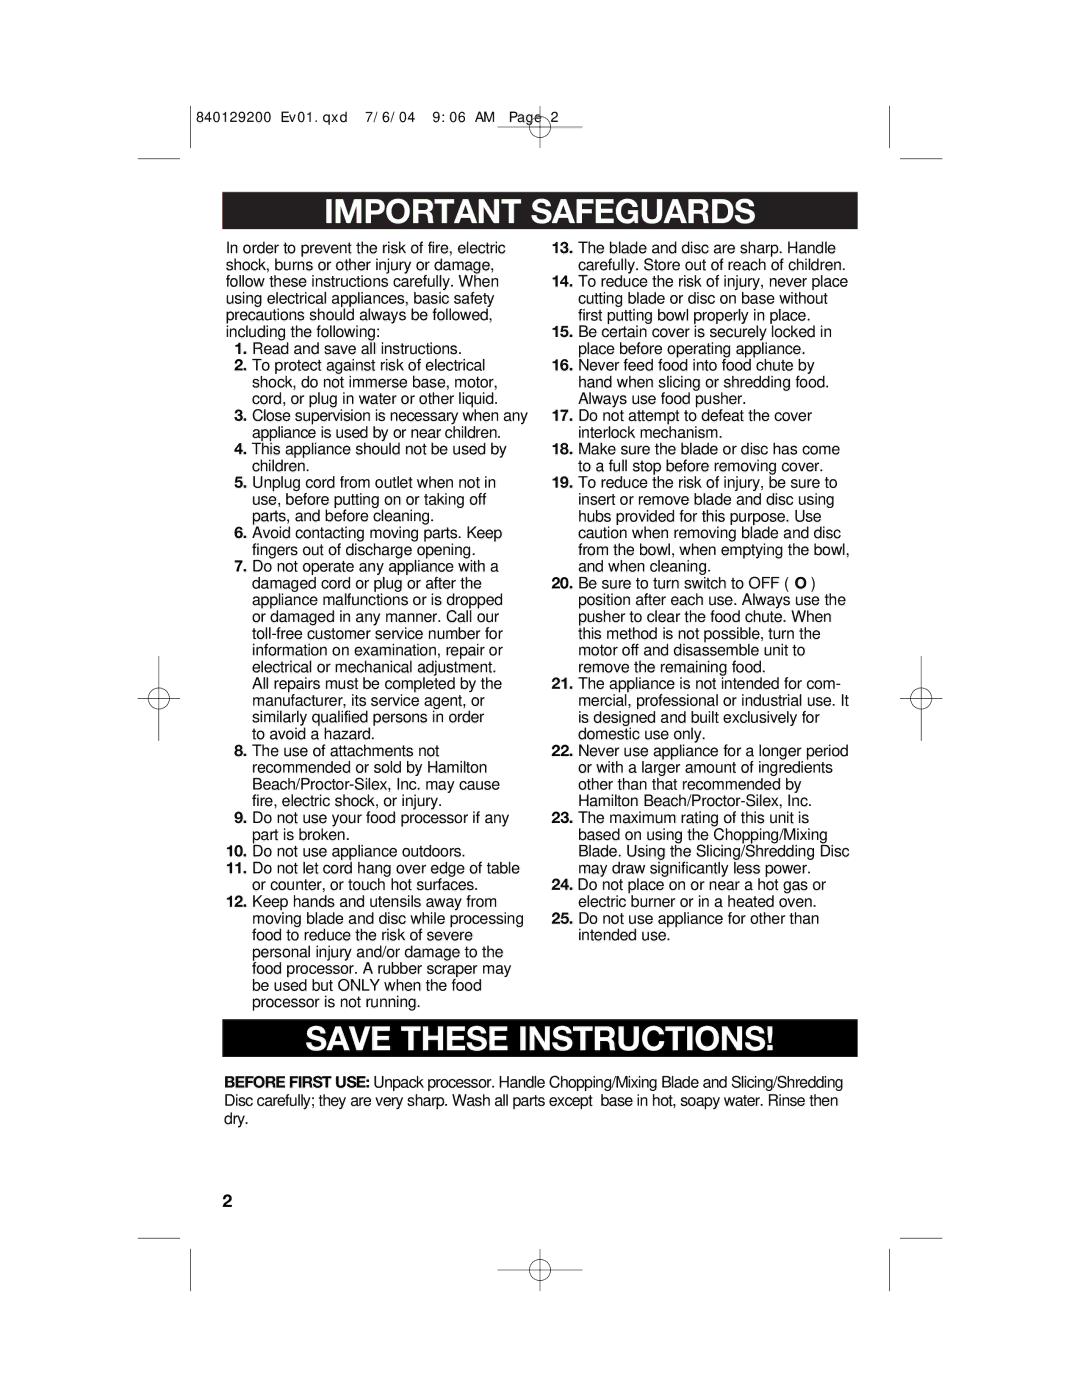 Hamilton Beach 70590C manual Important Safeguards 